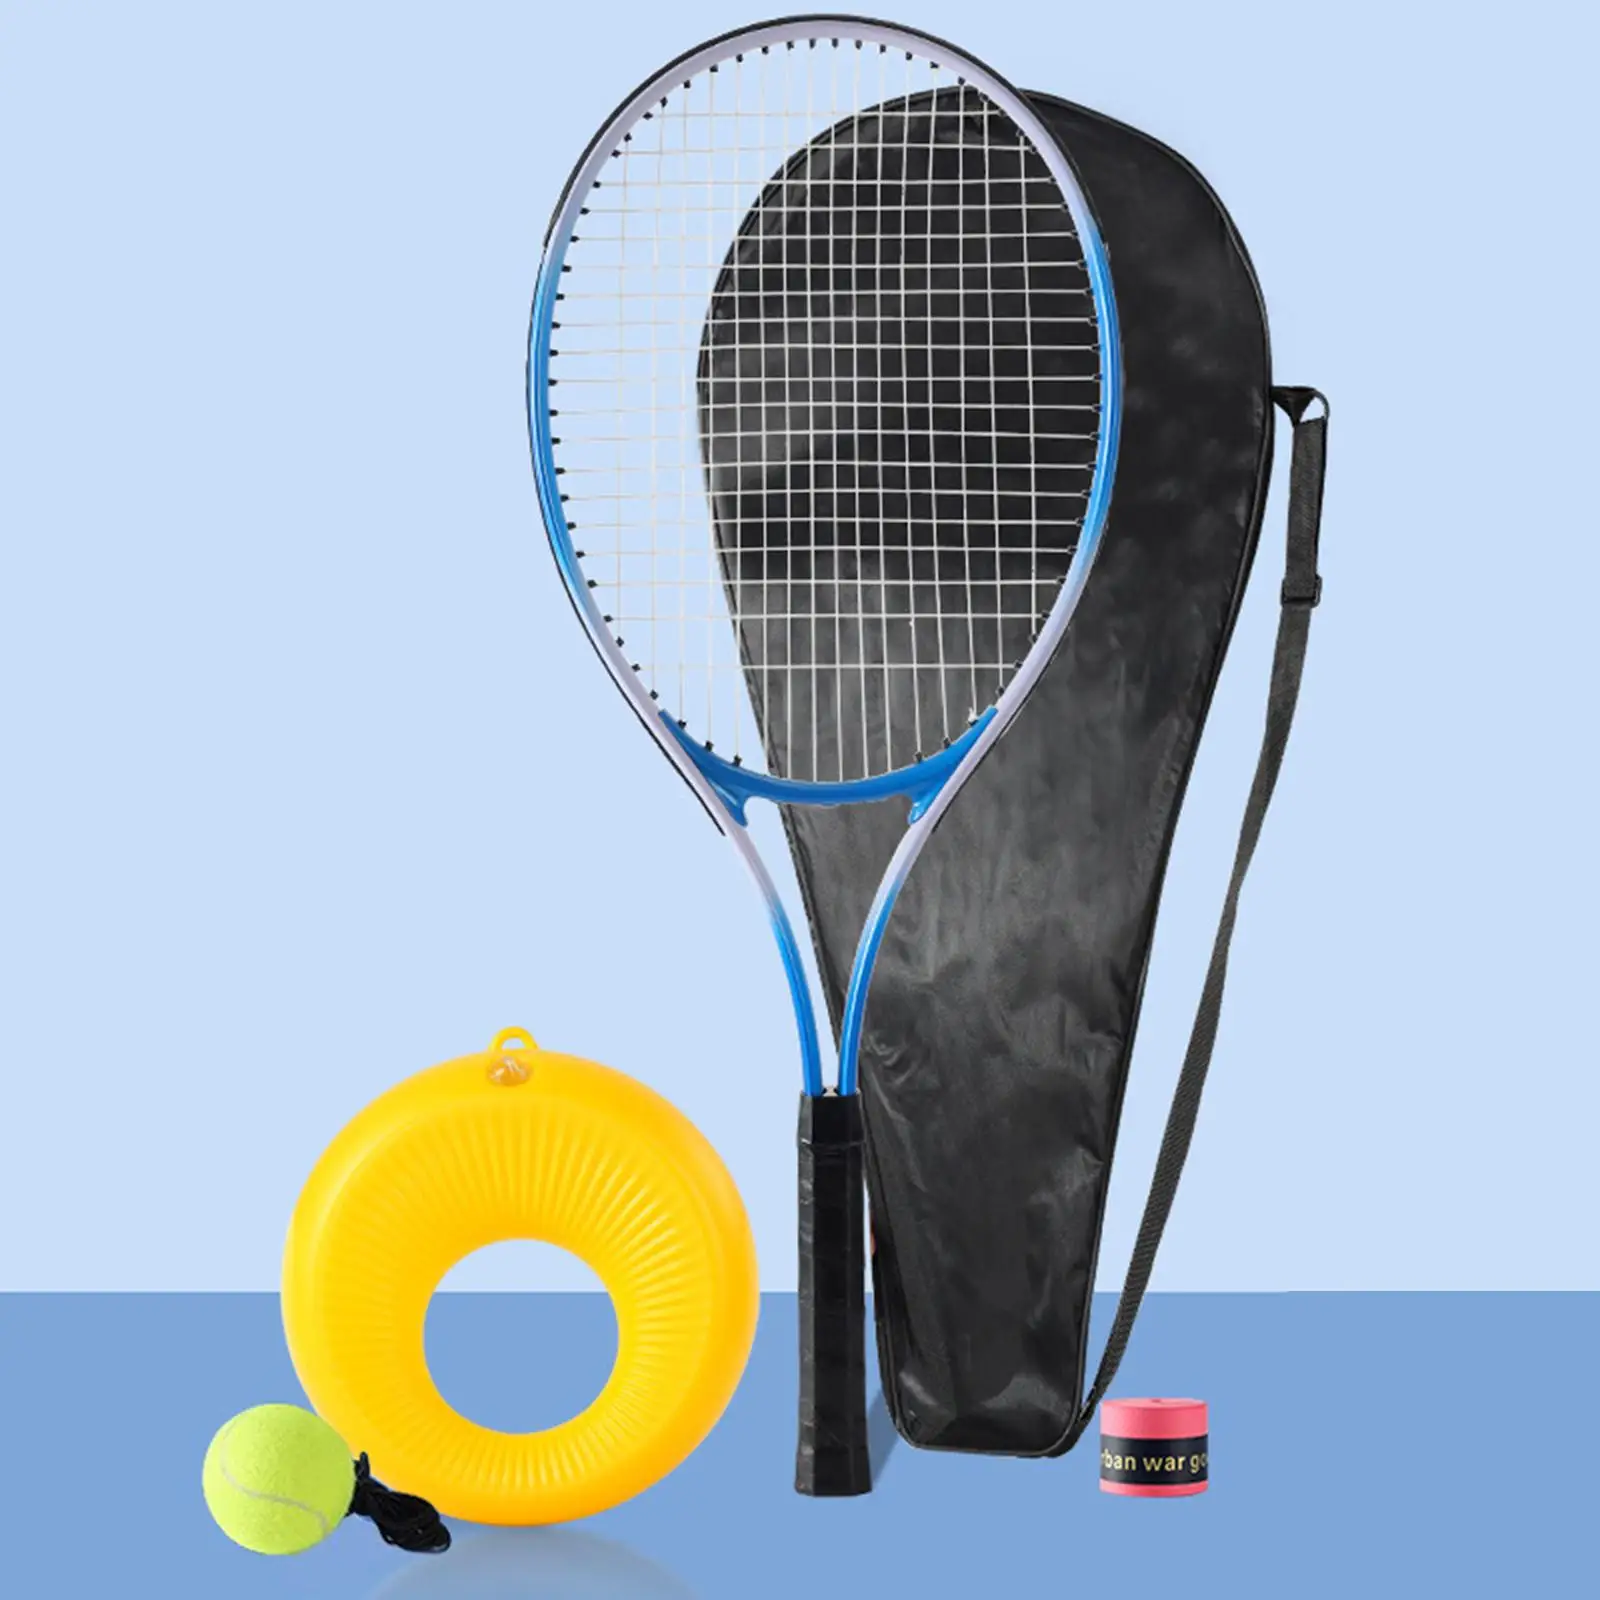 Self Practice Solo Training Tennis Training Tennis Racket Tool, Practical Single